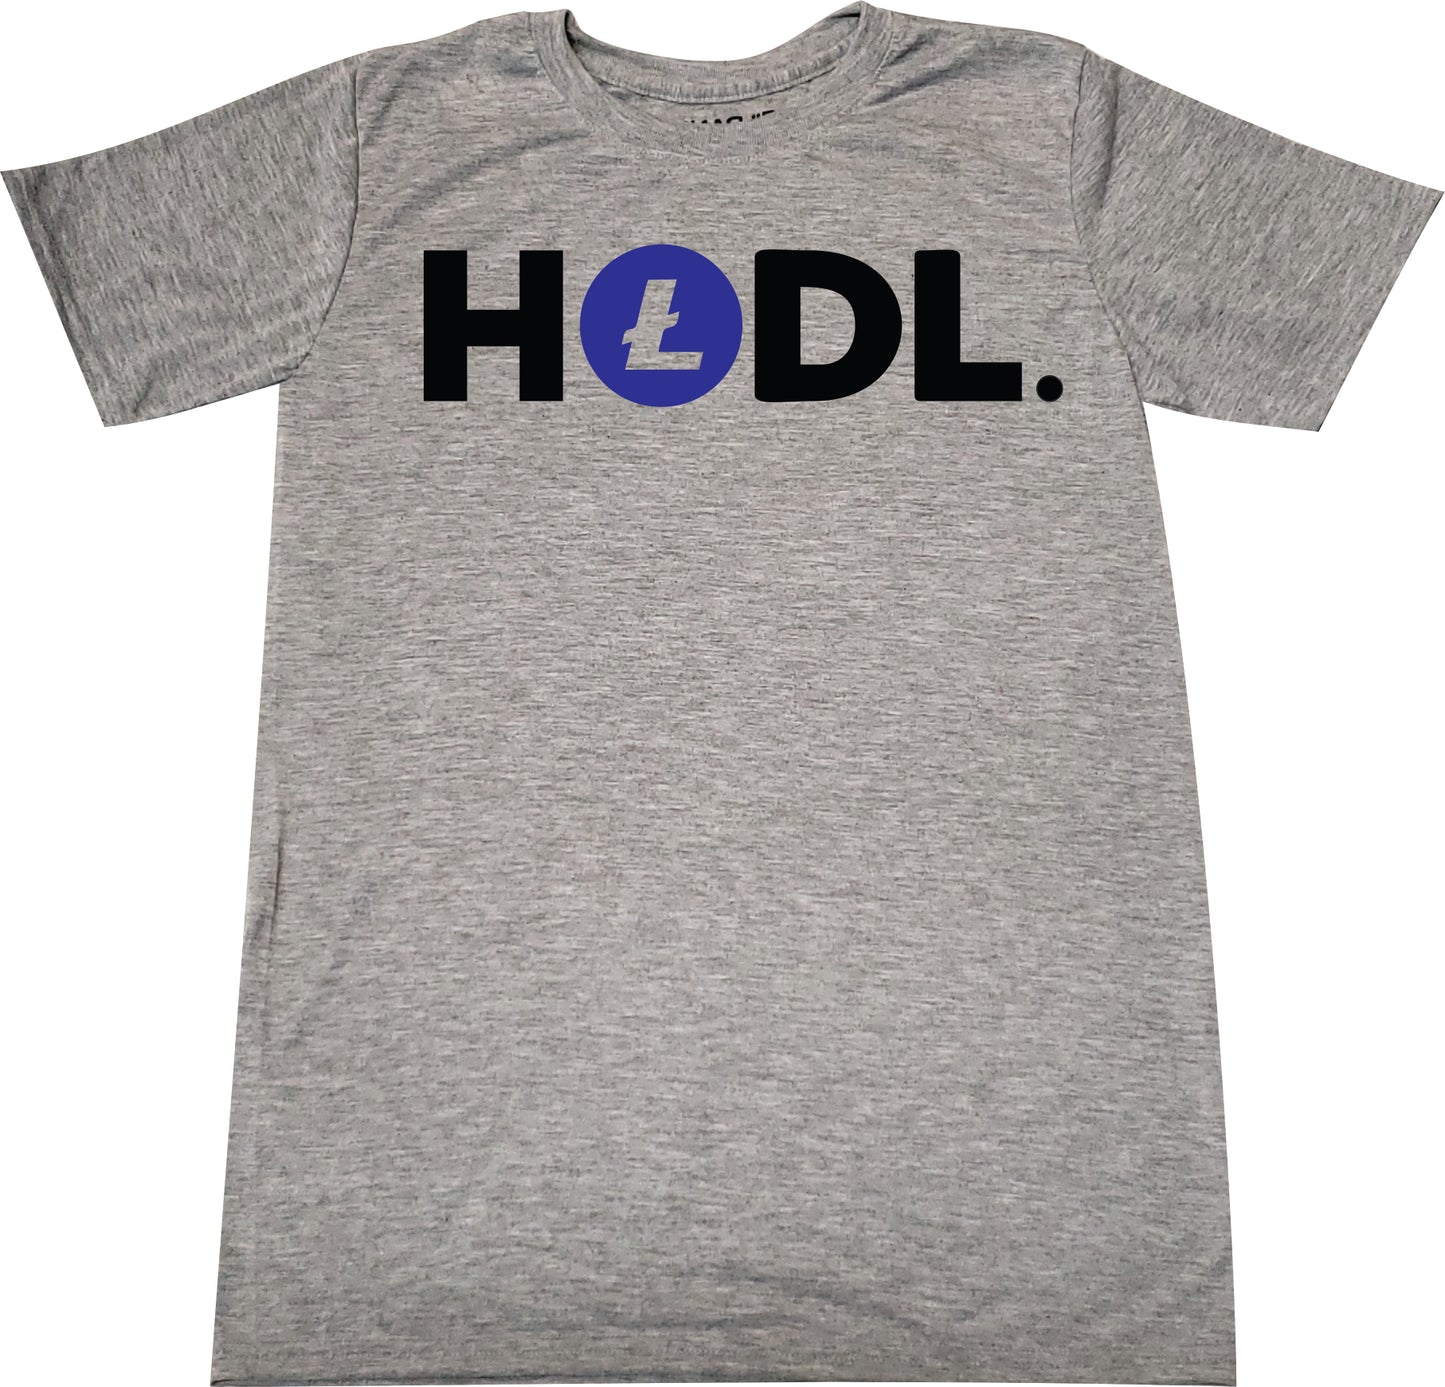 HODL bitcoin/litecoin tshirt